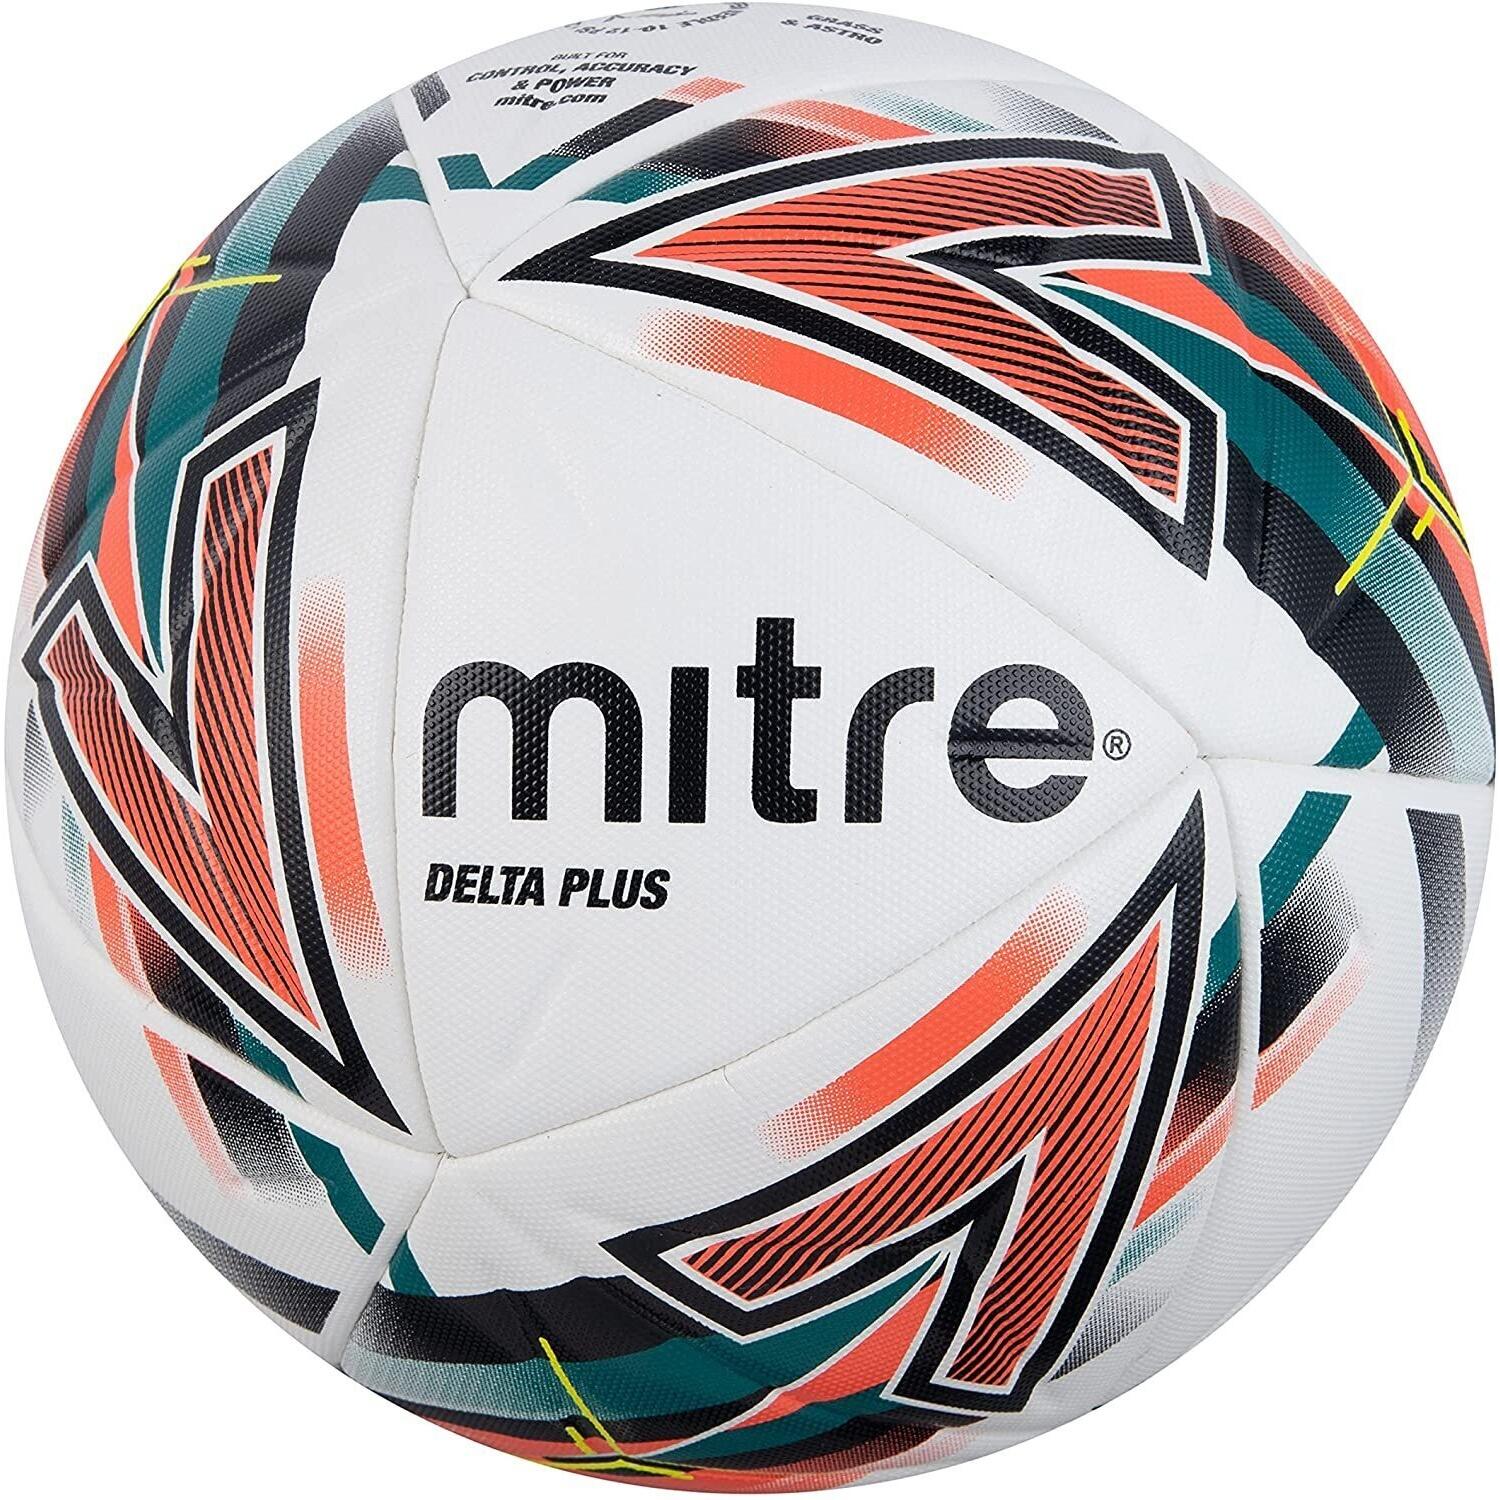 MITRE Delta Plus Match Football (White/Black/Orange)